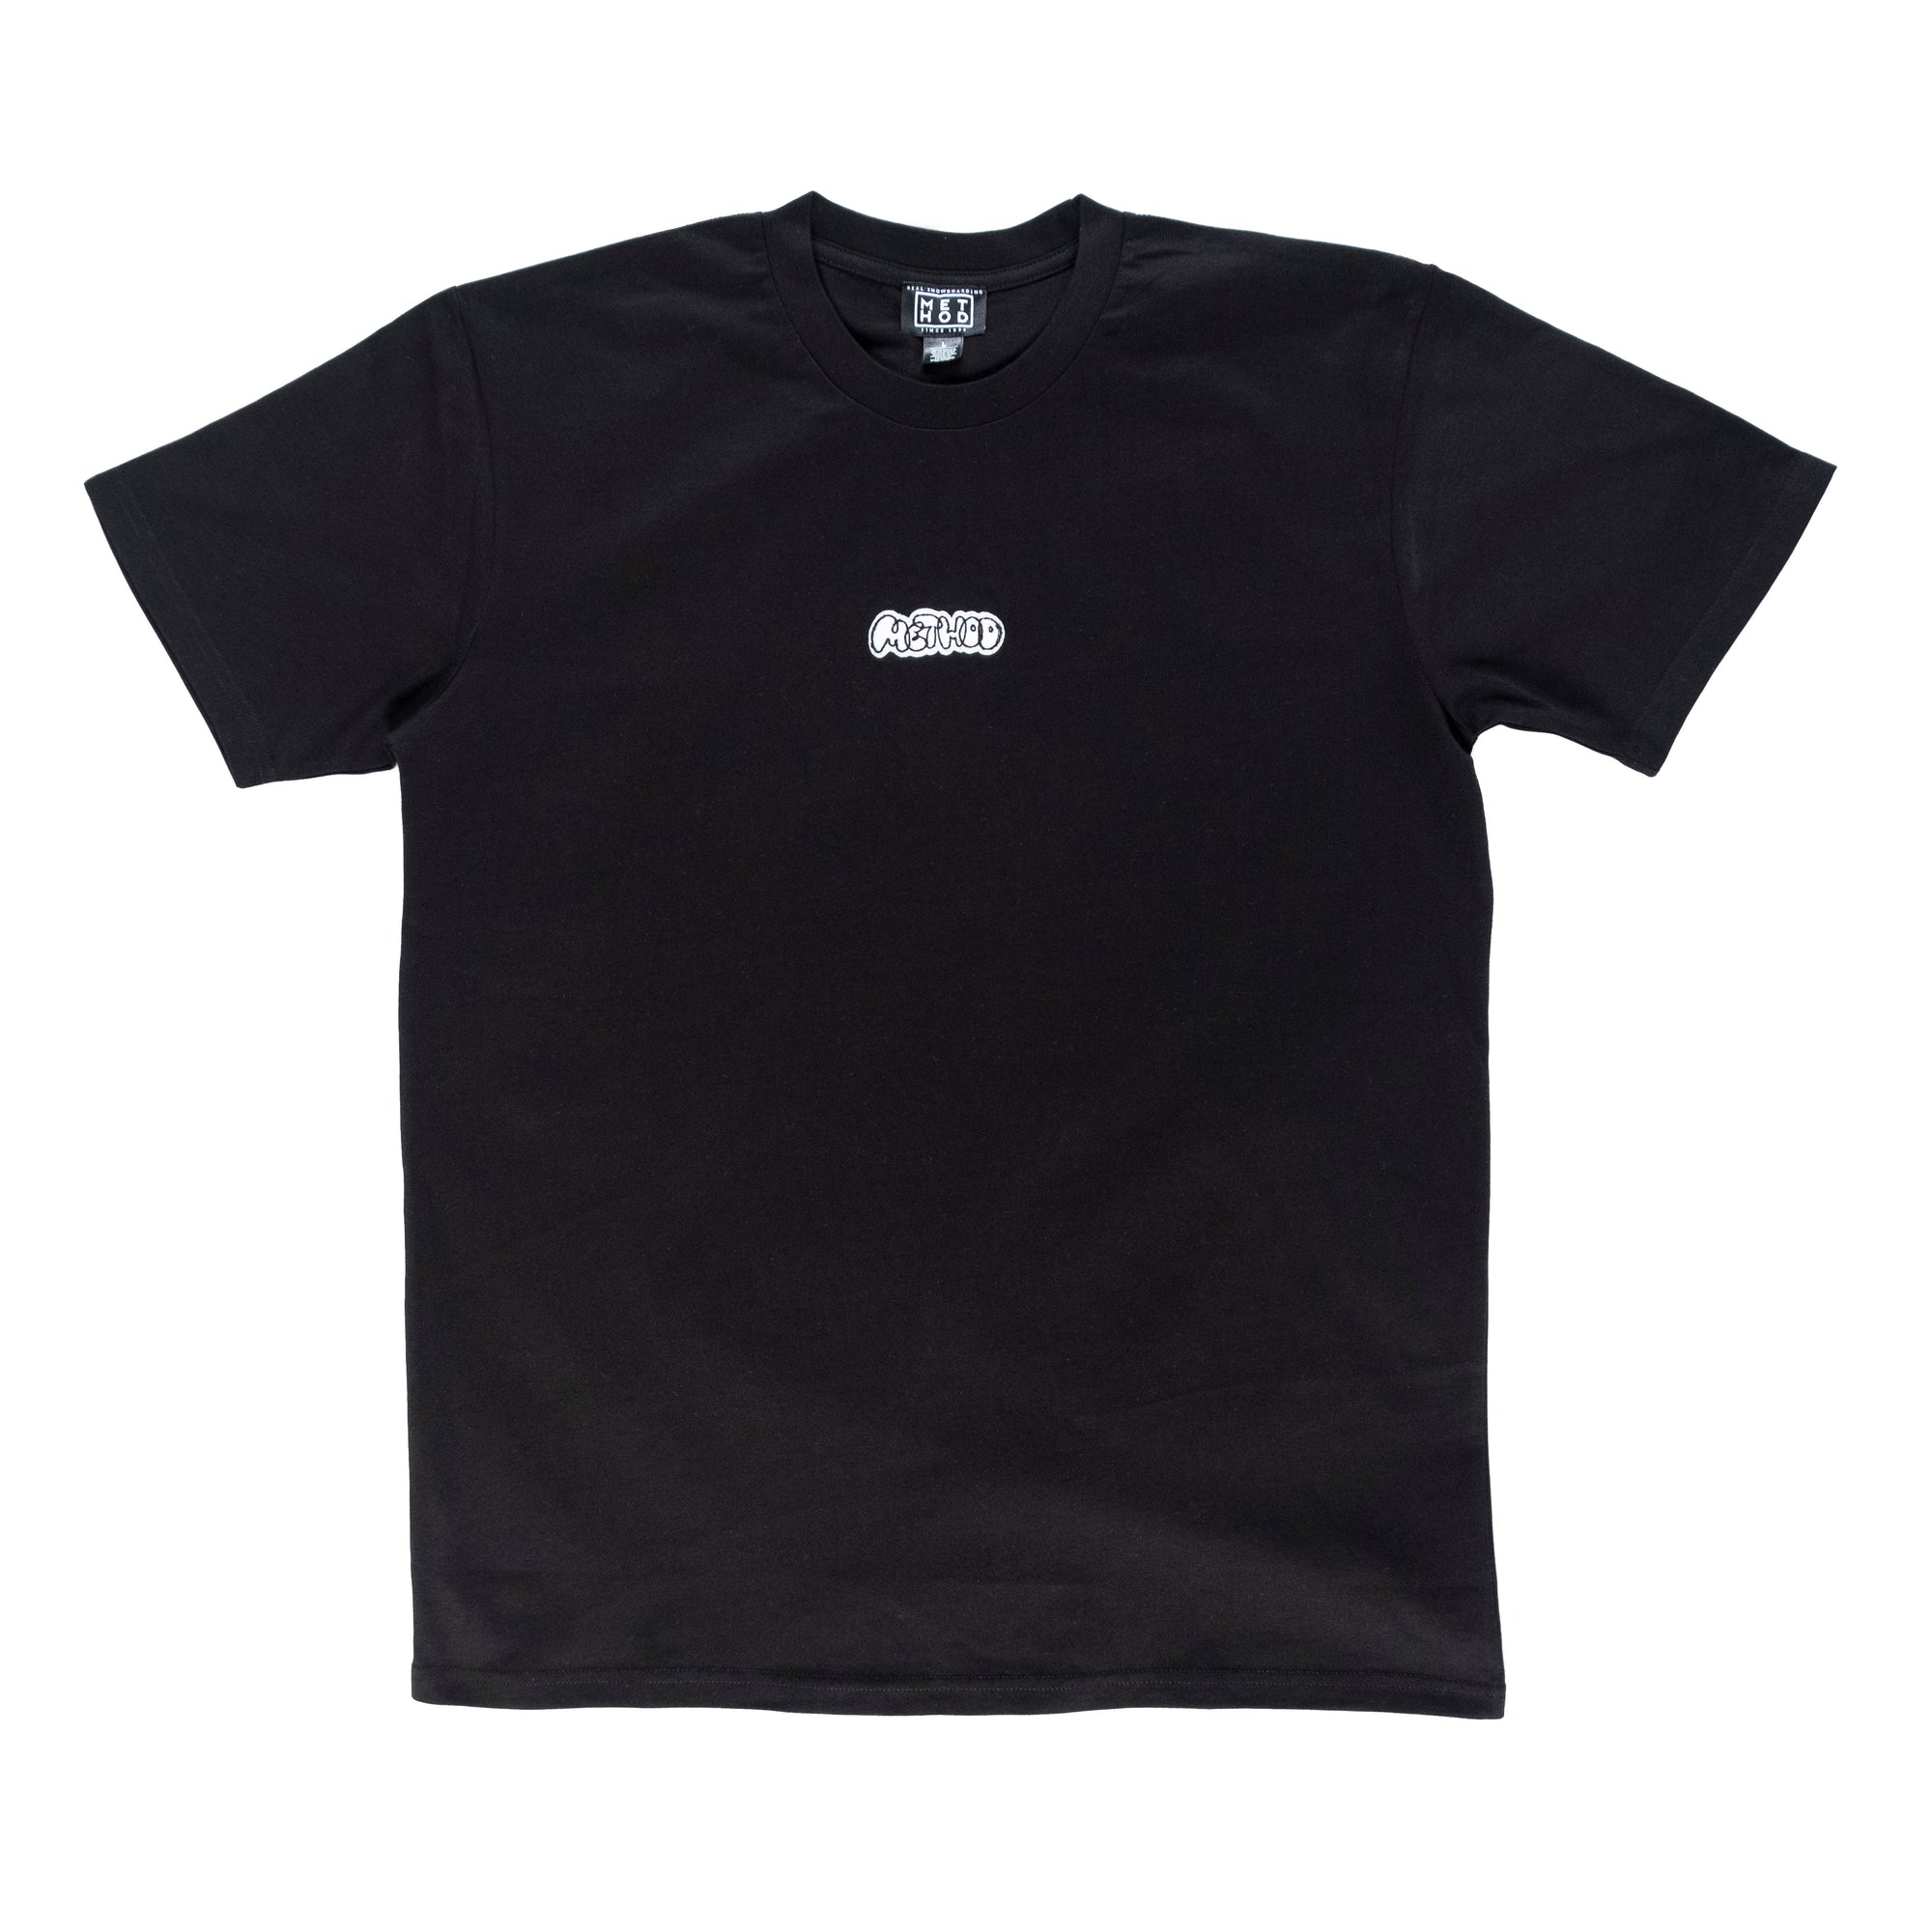 Method Puff T-Shirt - Black